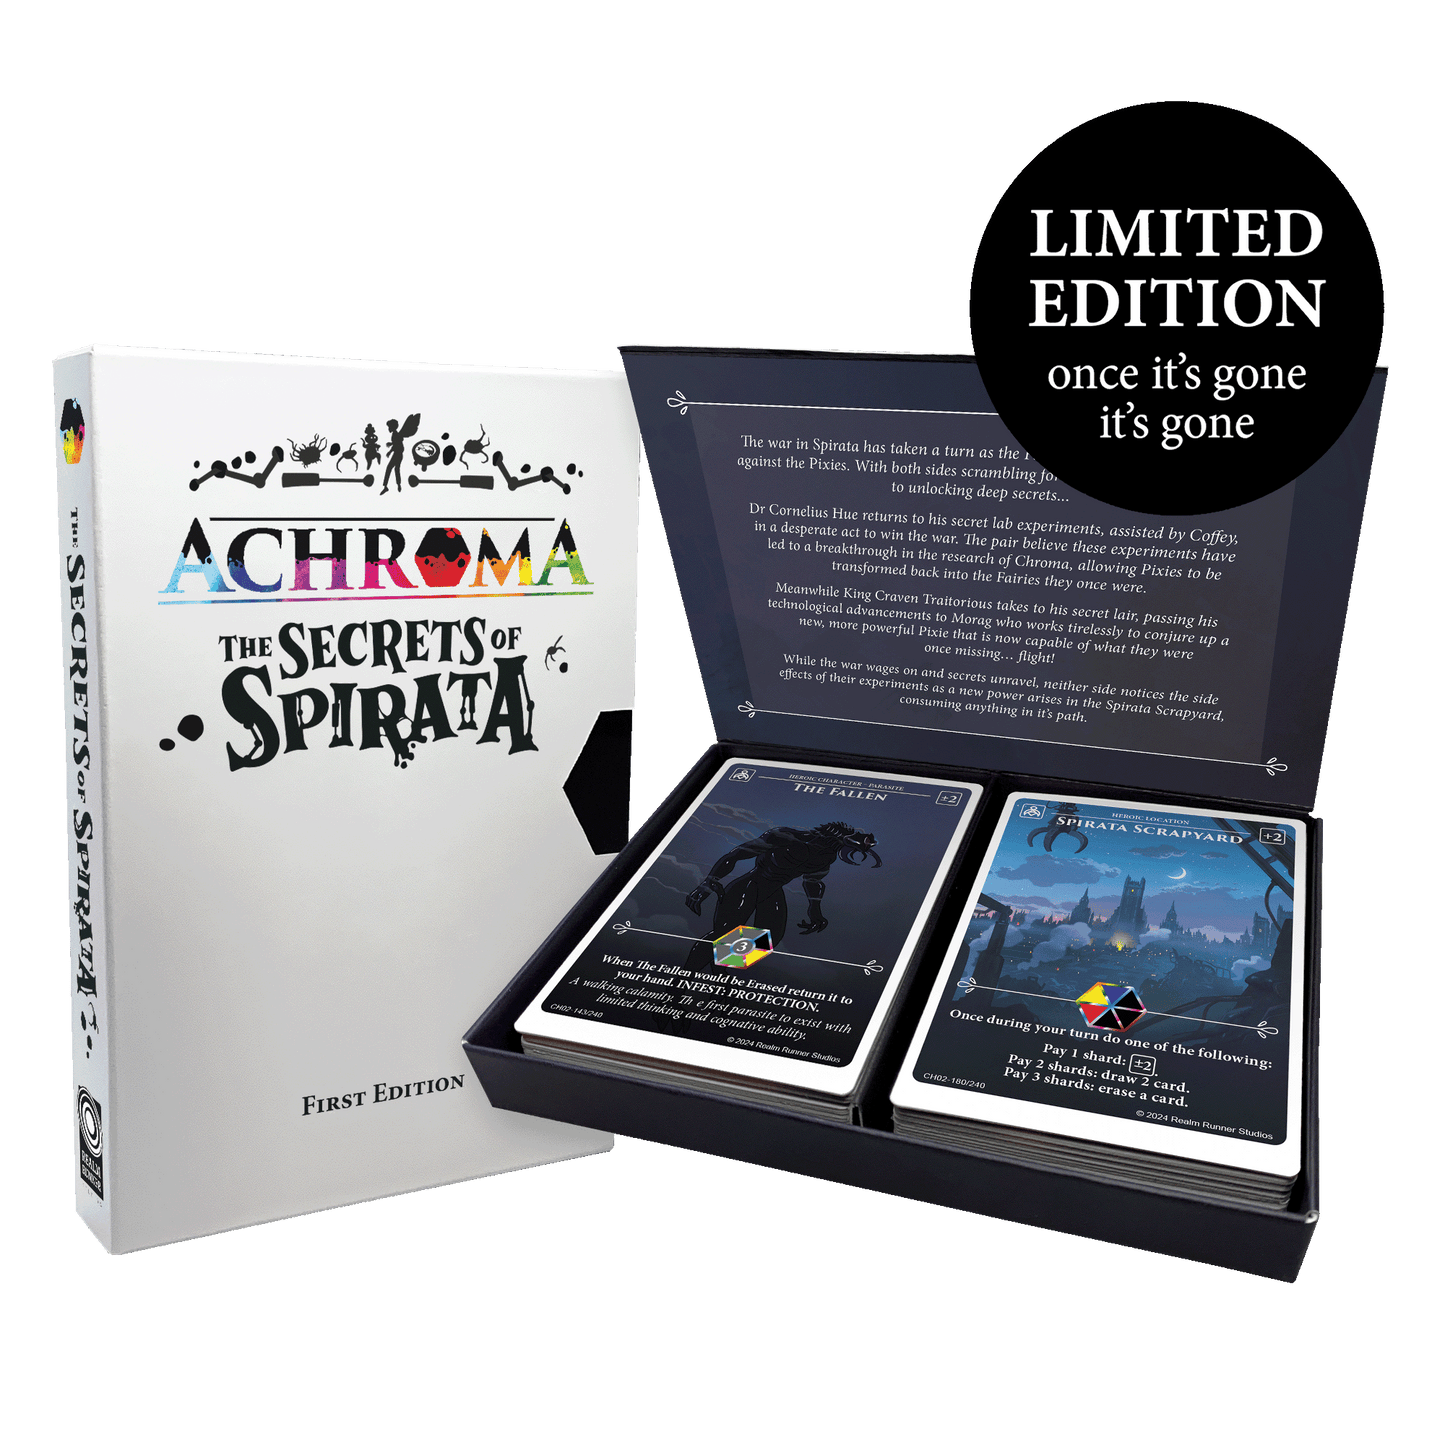 Achroma: The Secrets of Spirata - First Edition